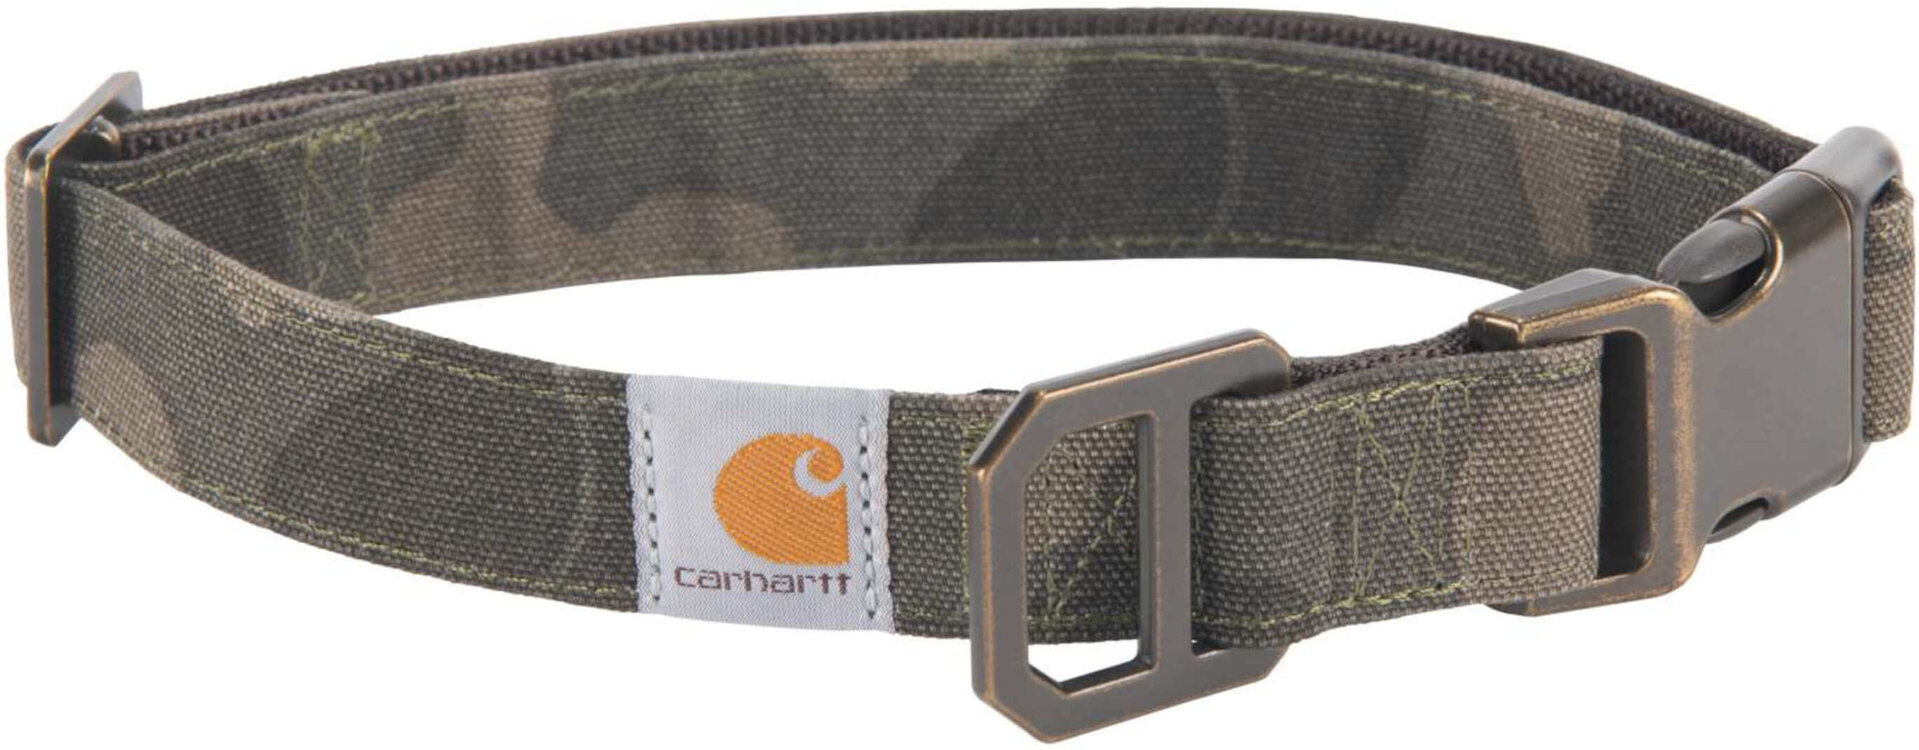 Carhartt Journeyman Collar - Multicolor (L)